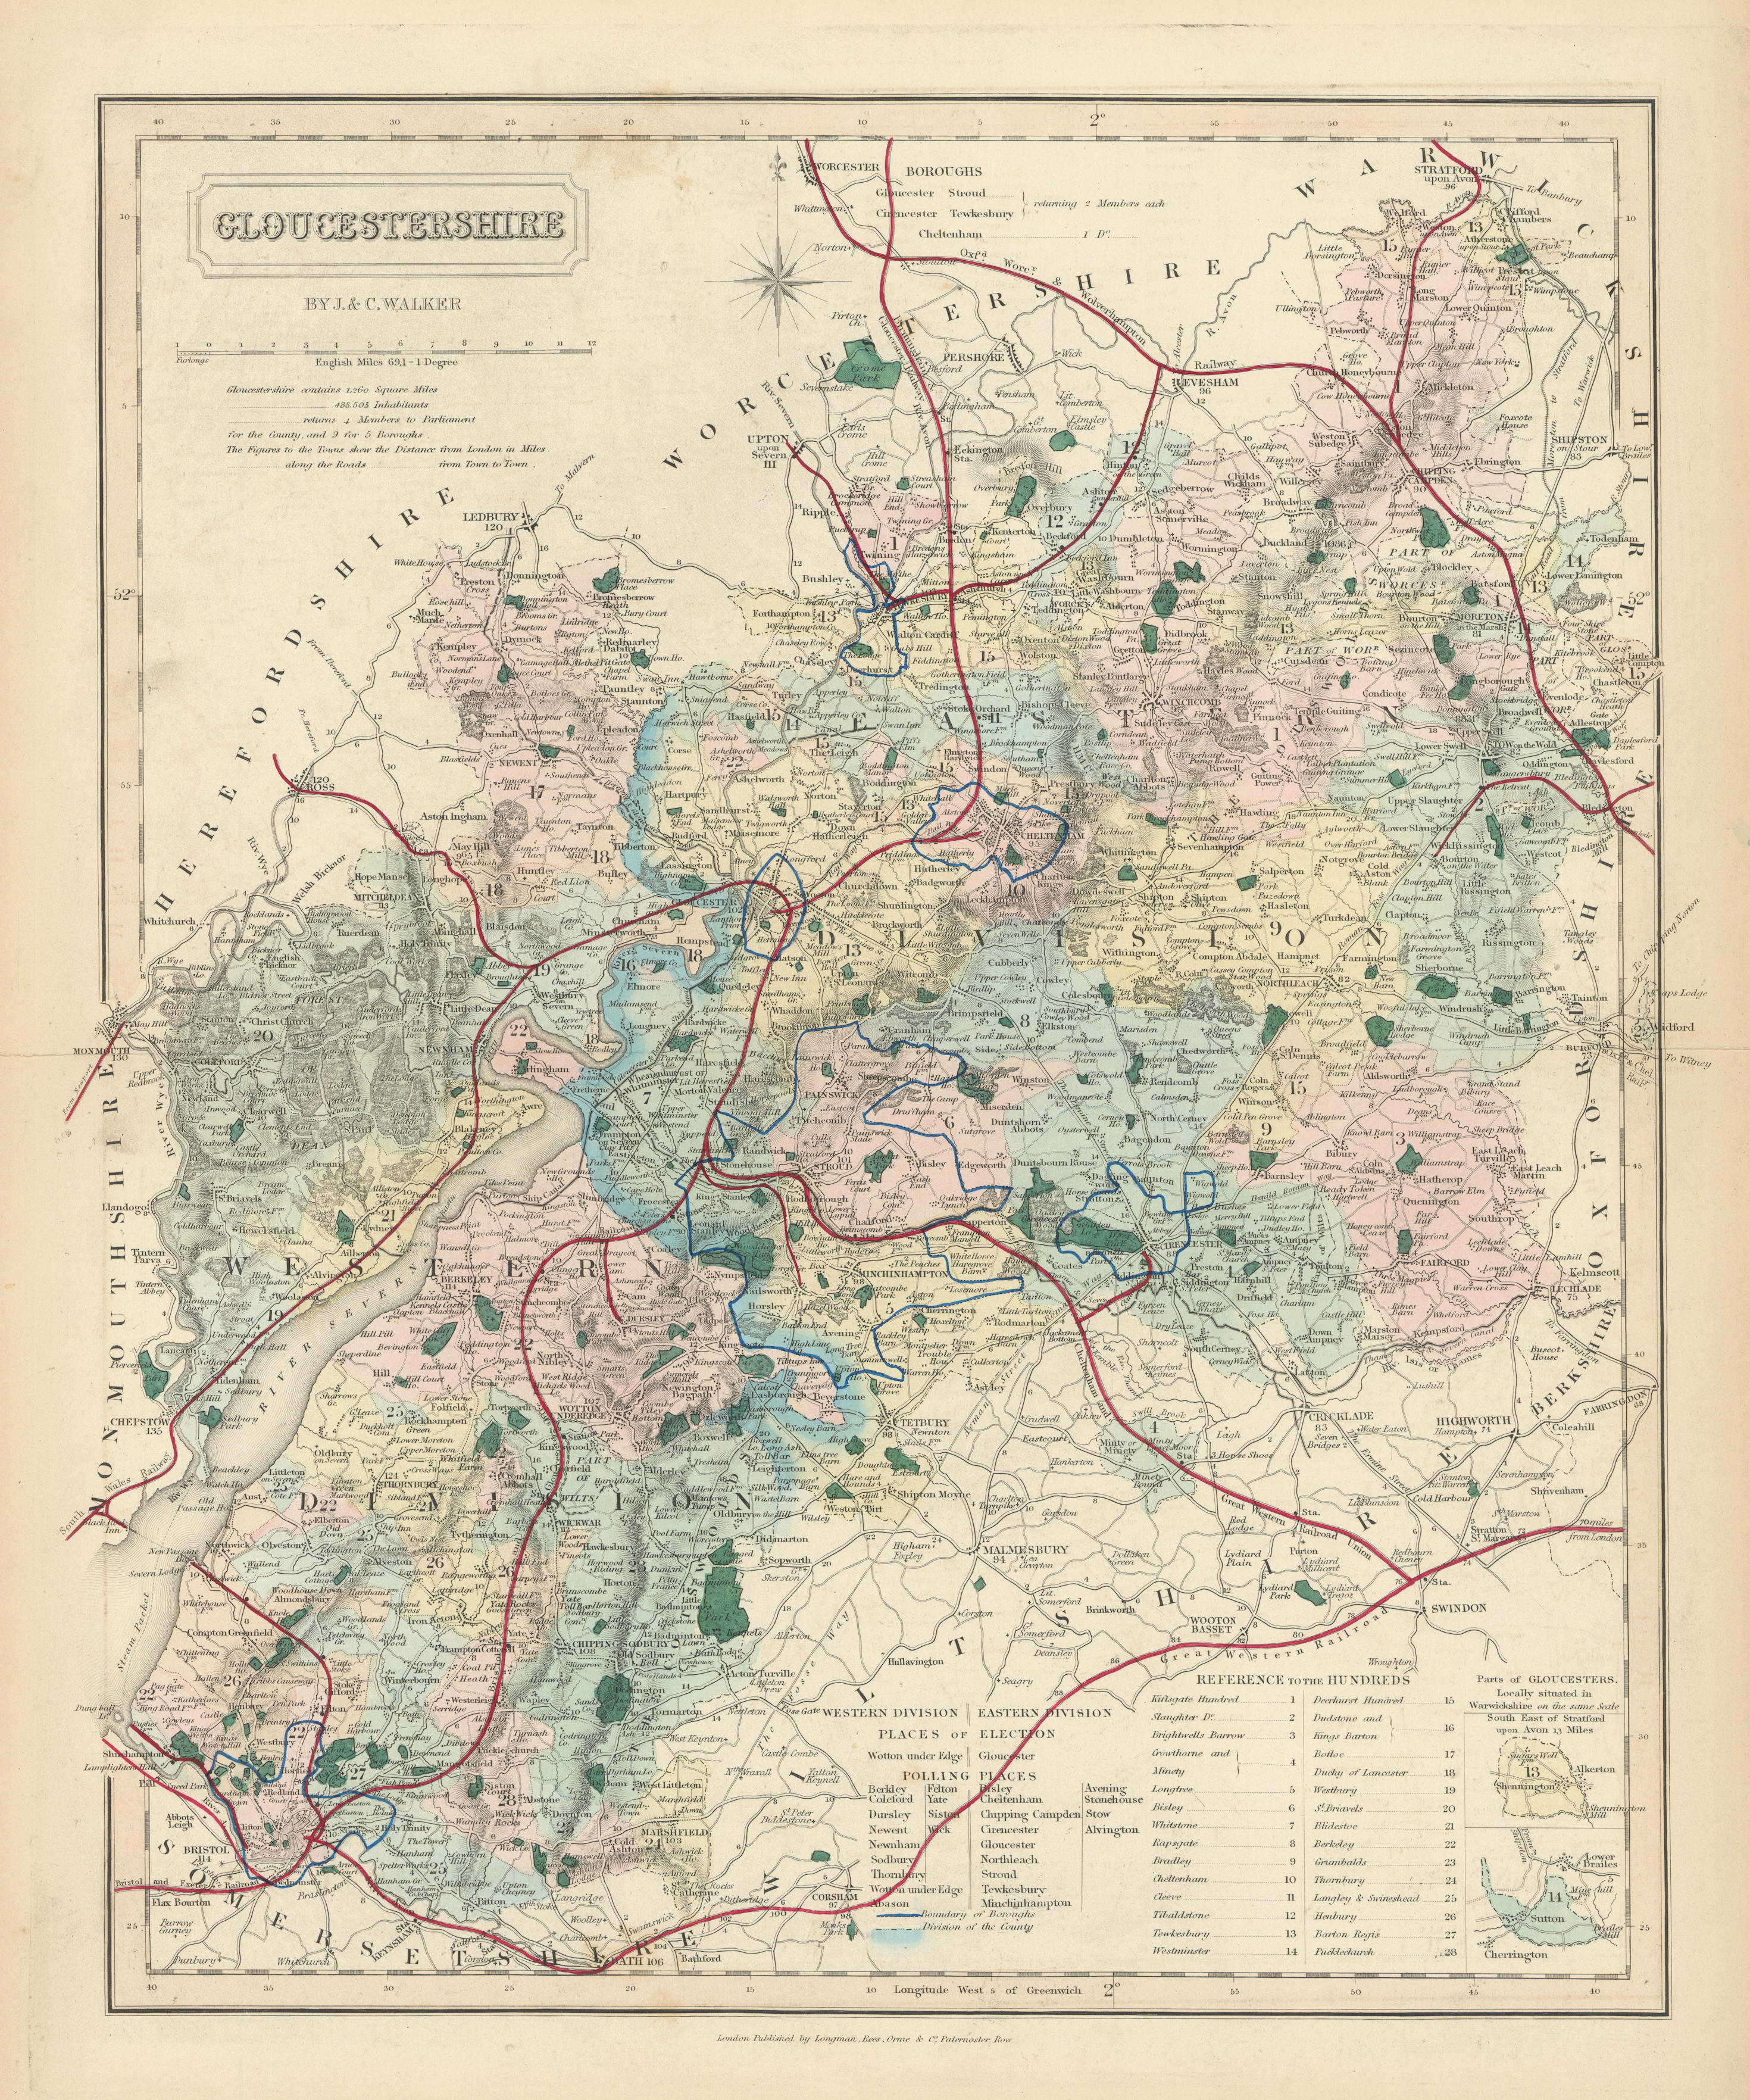 Associate Product Gloucestershire antique county map by J & C Walker. Railways & boroughs 1870